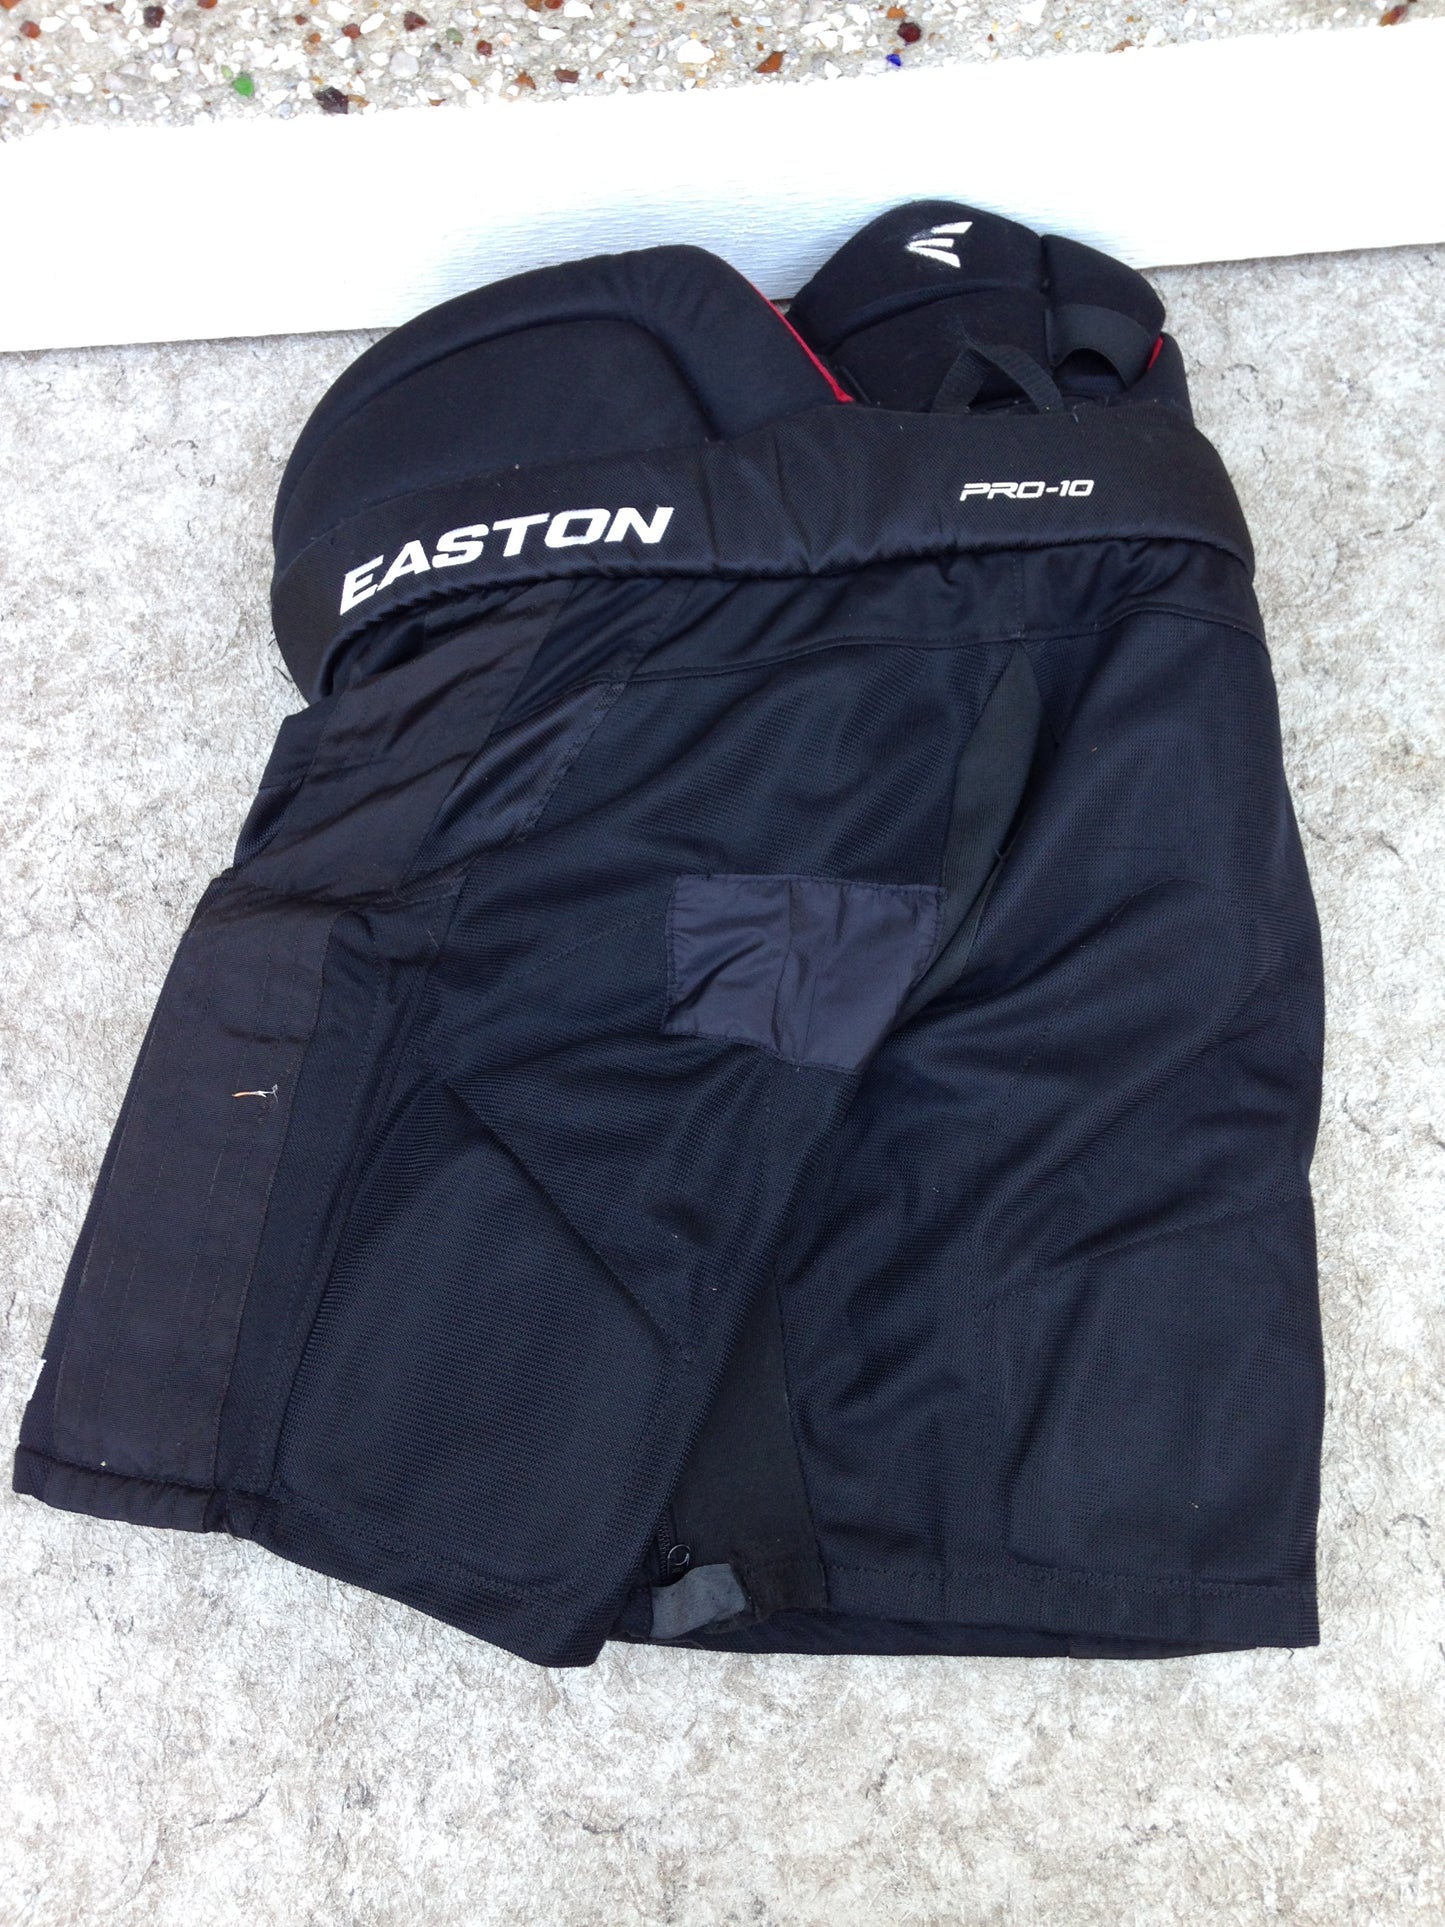 Hockey Pants Men's Size Medium Easton Pro Minor Wear Black Red